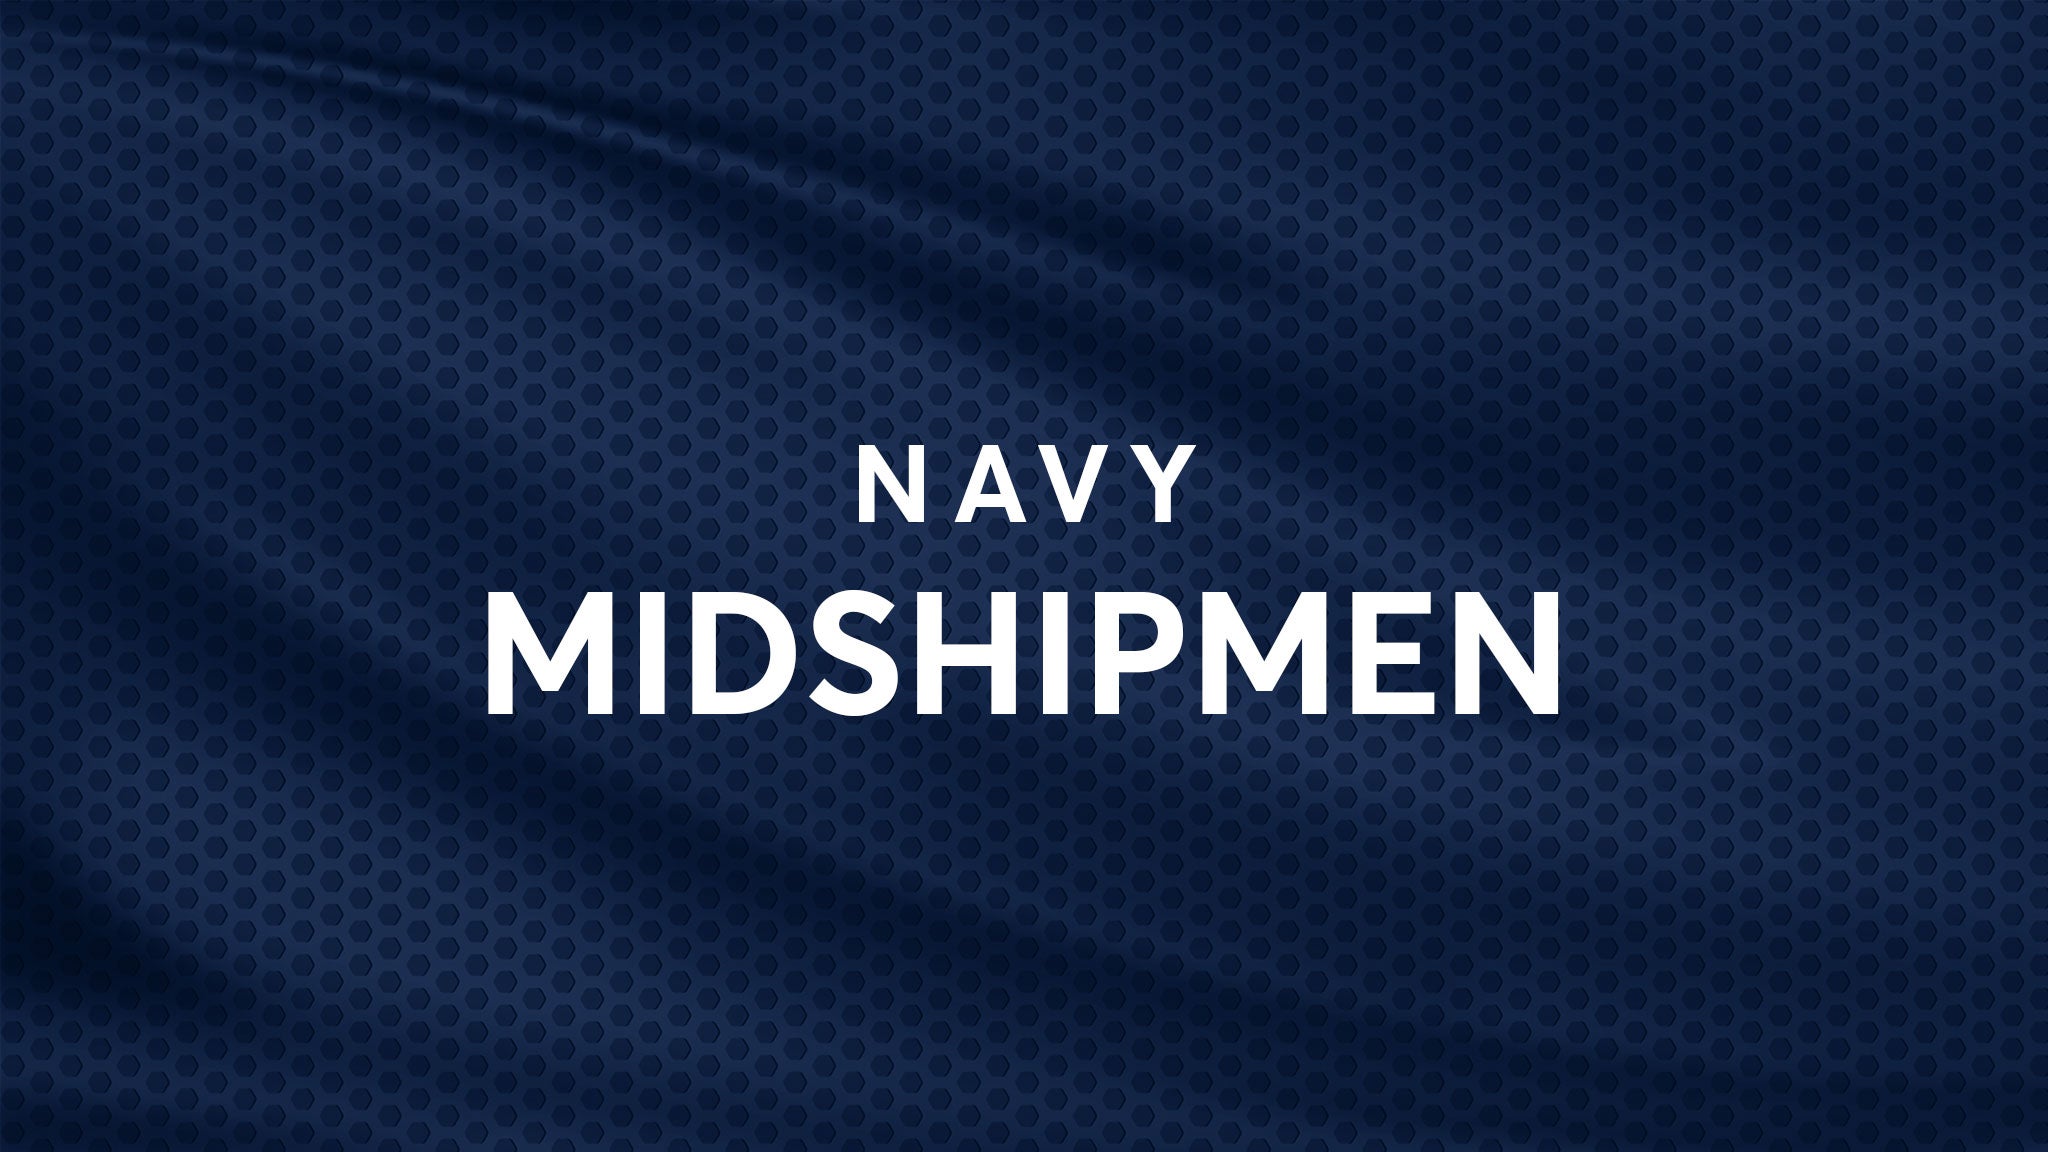 Navy Midshipmen Football vs. Bucknell Bison Football hero